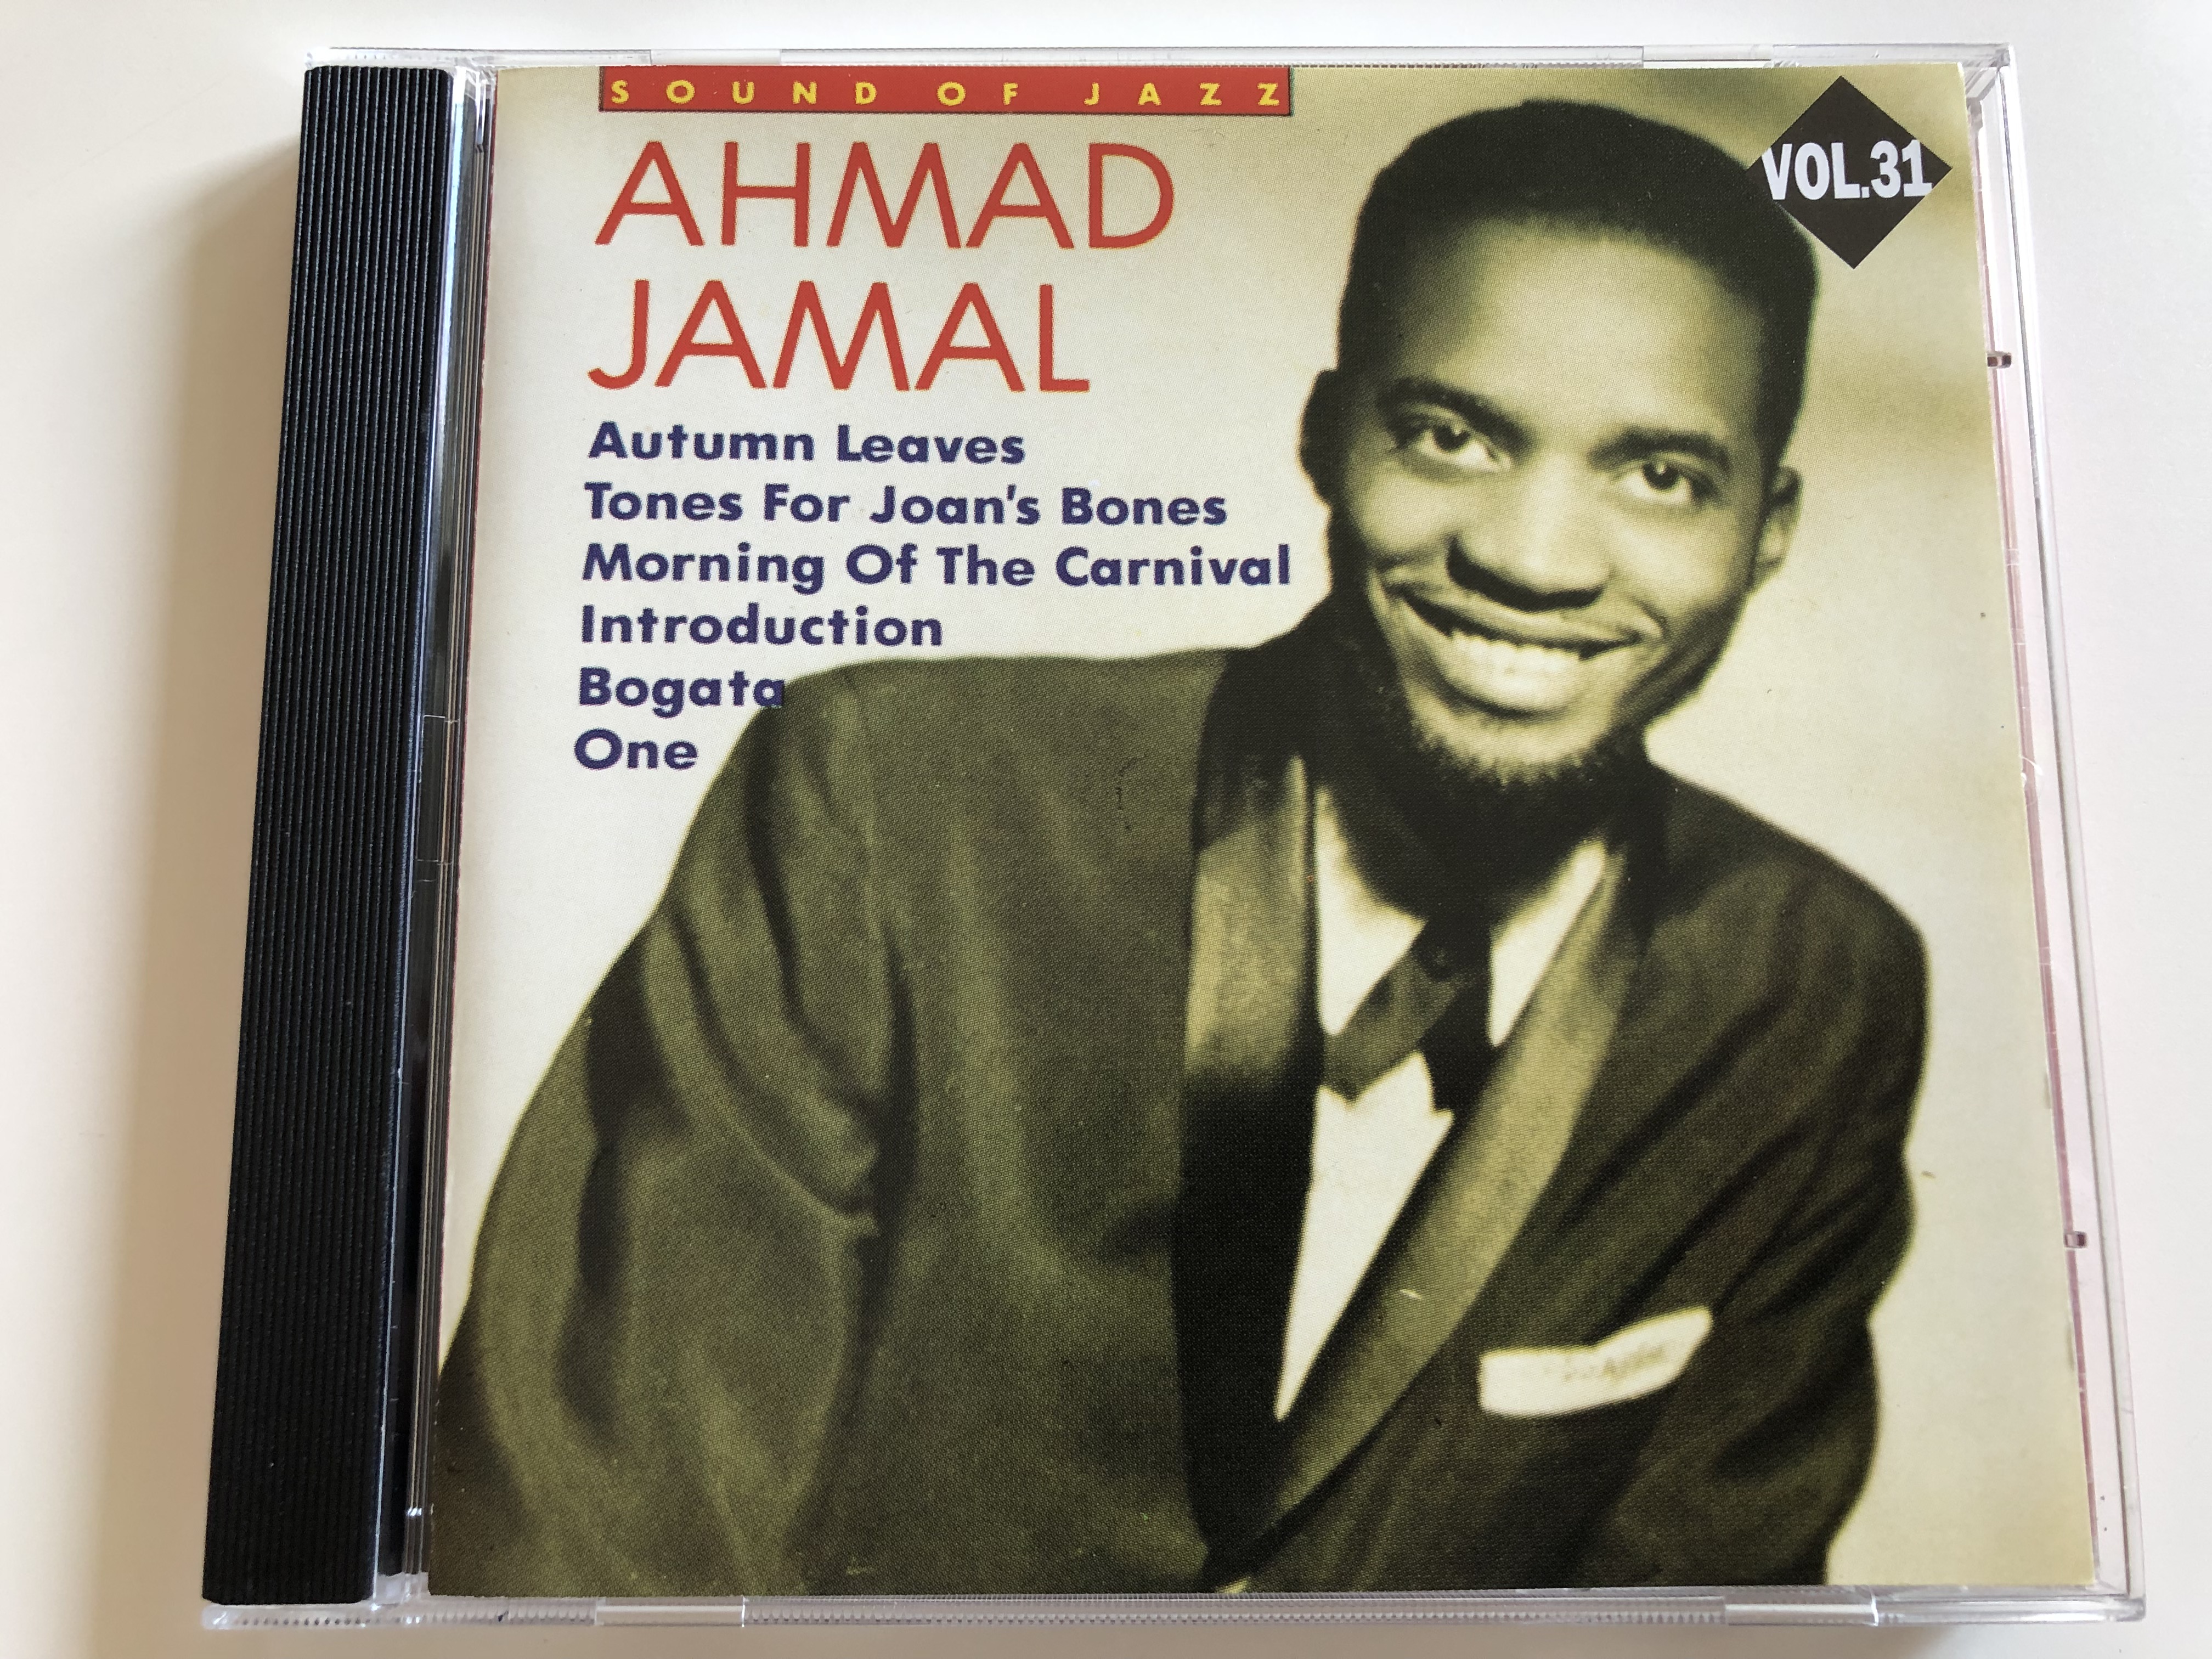 sound-of-jazz-vol.-31-ahmad-jamal-autumn-leaves-tones-for-joan-s-bones-morning-of-the-carnival-introduction-bogata-one-galaxy-music-ltd.-audio-cd-1994-3886312-1-.jpg